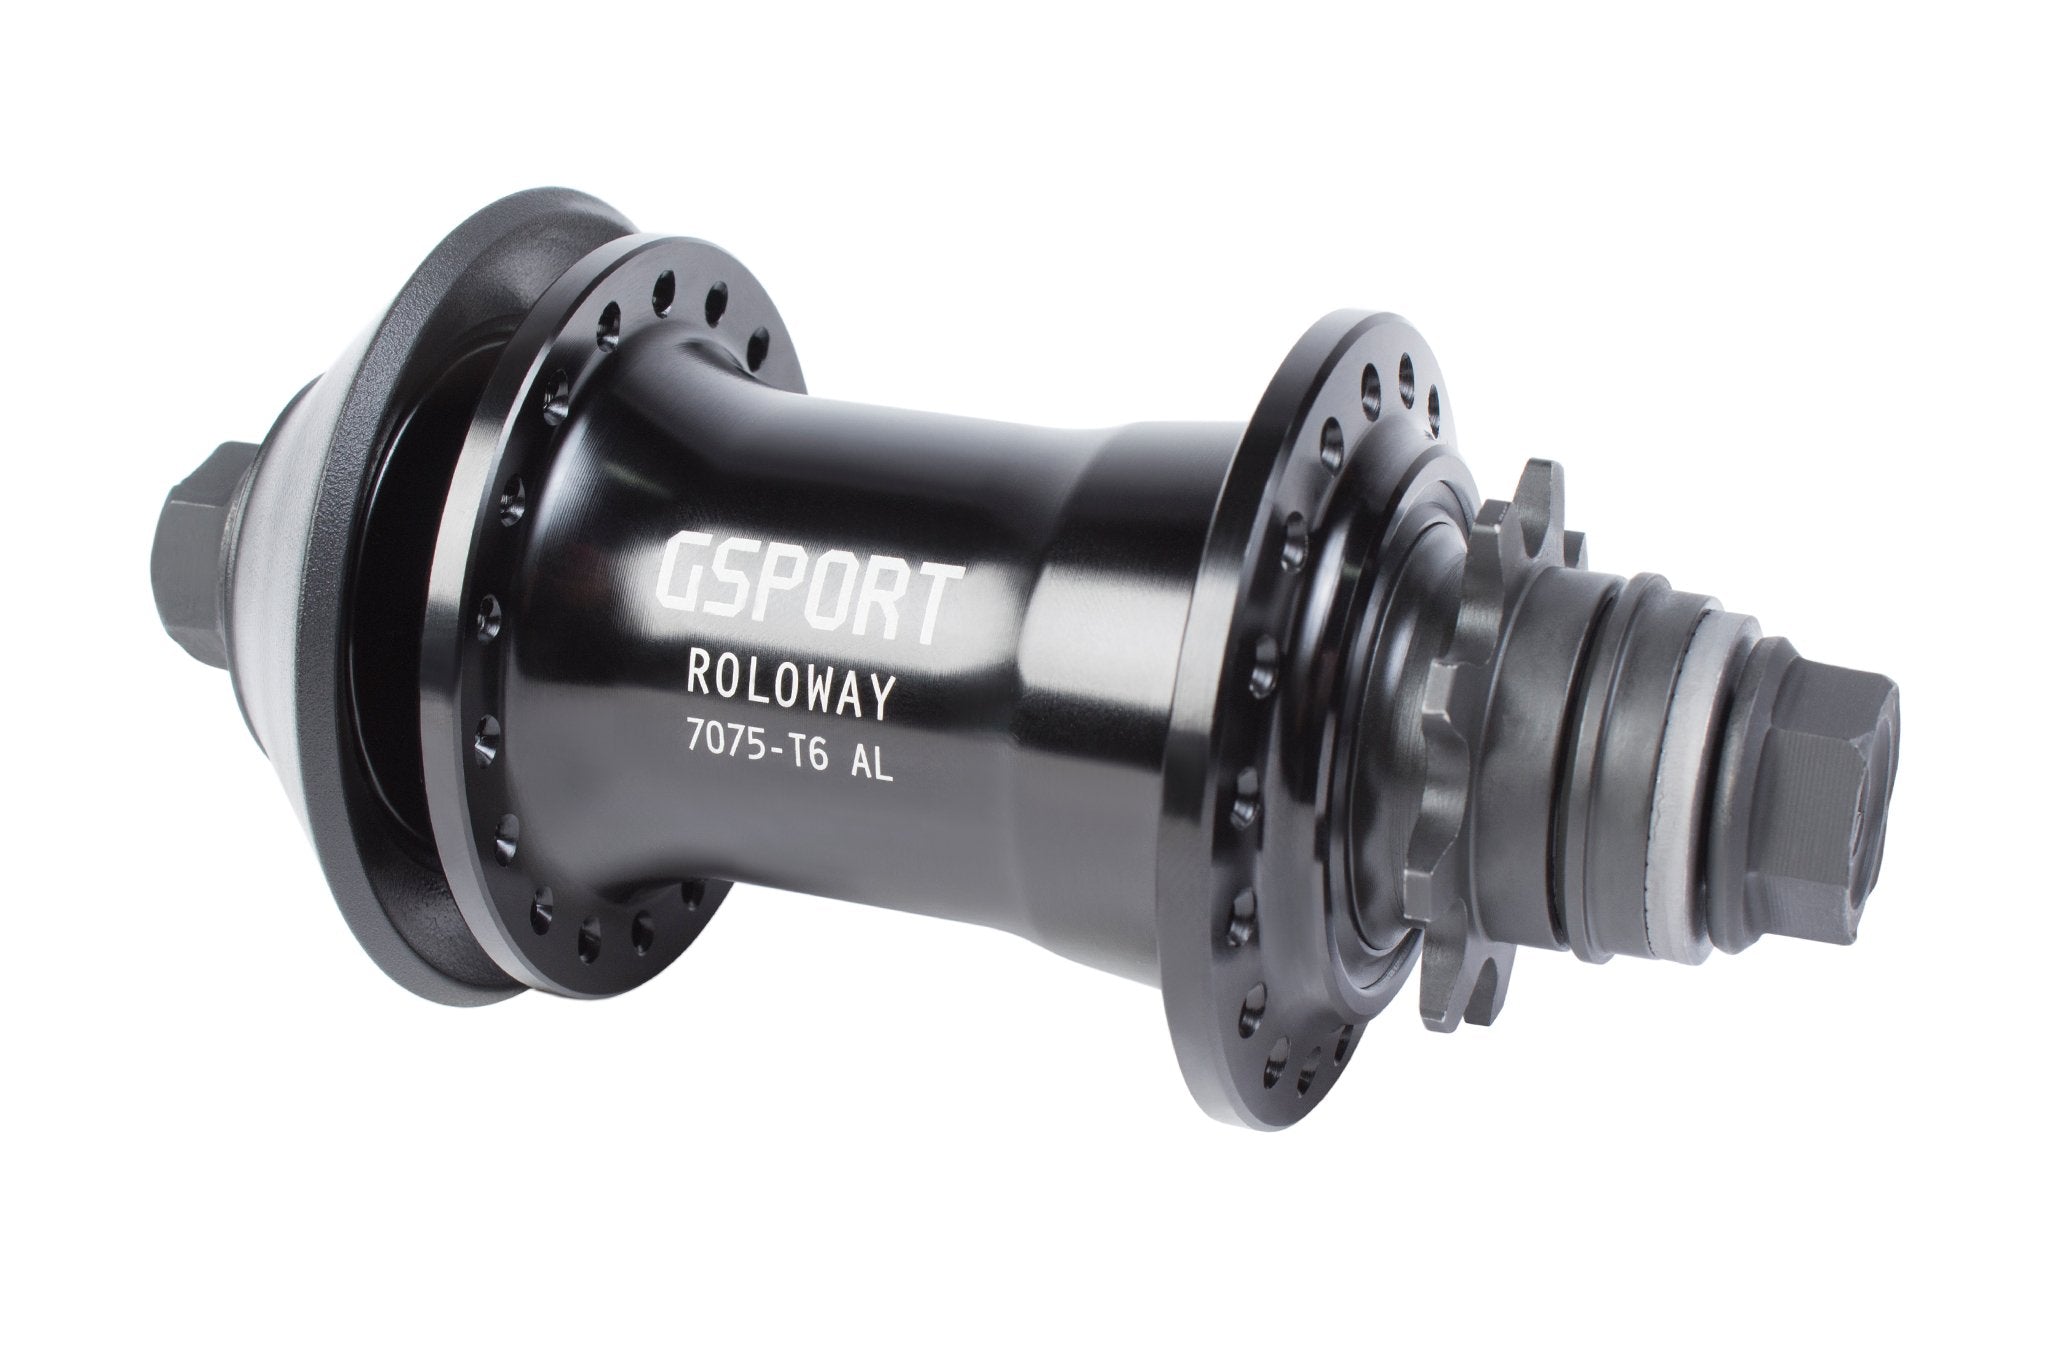 G Sport Roloway Cassette Hub - Pusher BMX Mail Order